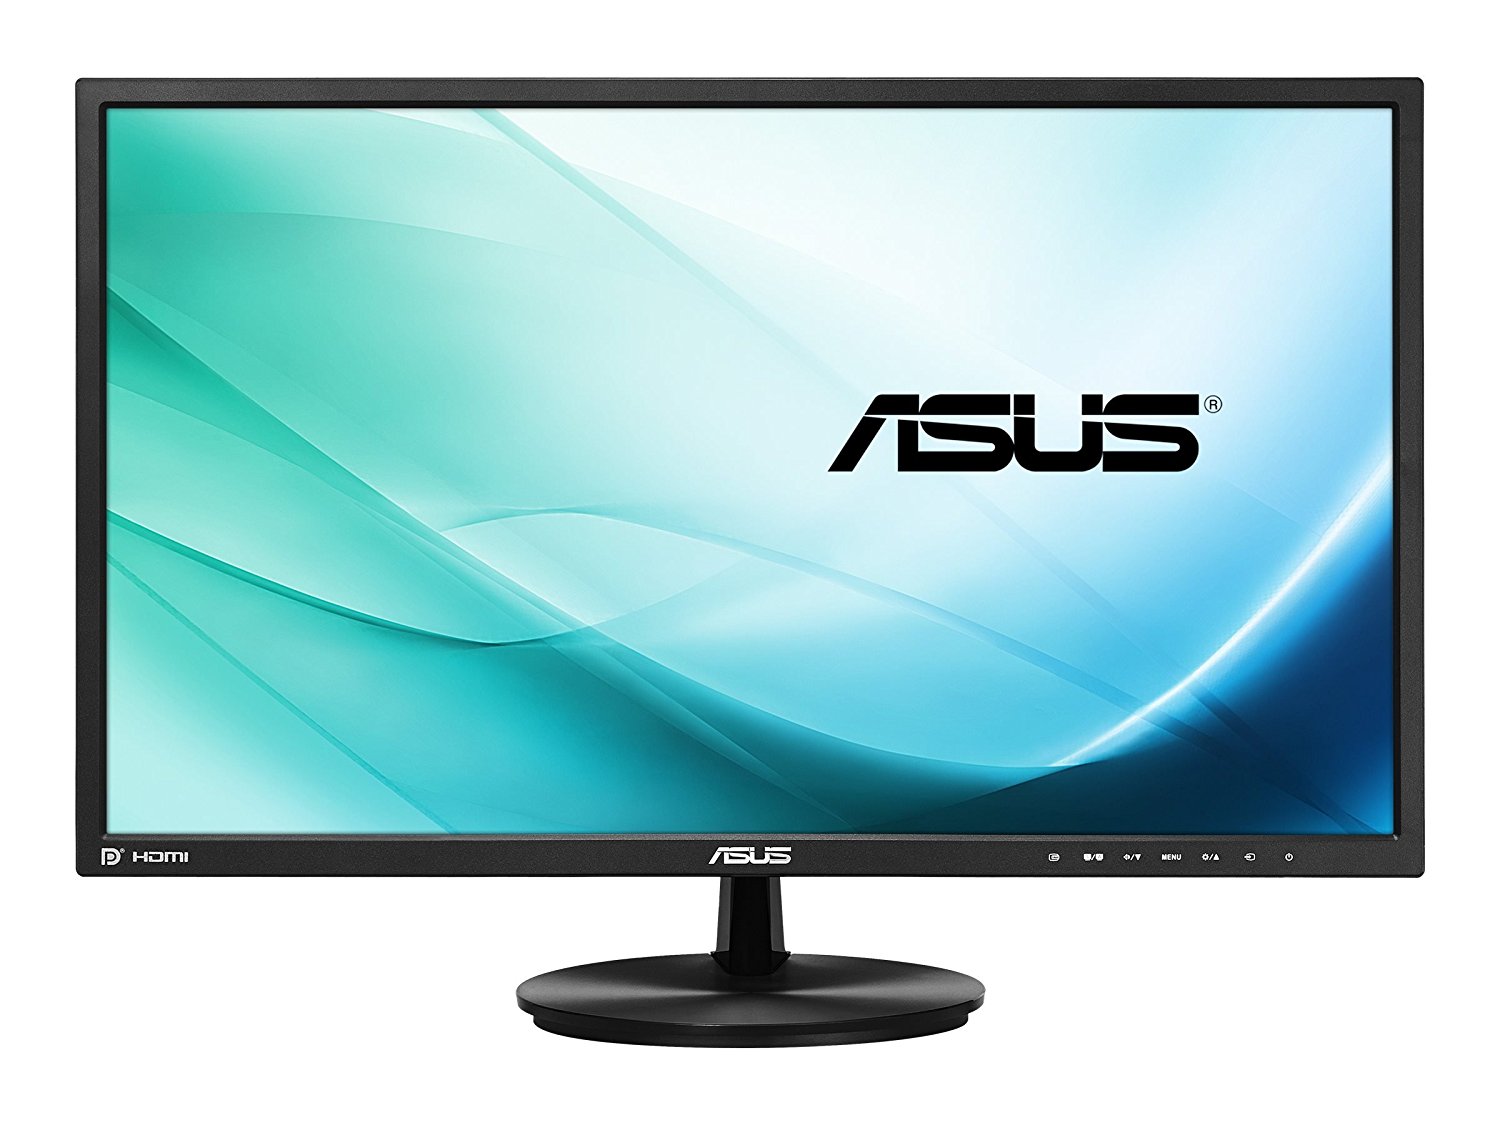 Asus VS239H-P 23 inch Widescreen 5ms 50,000,000:1 VGA/DVI/HDMI LCD Monitor 